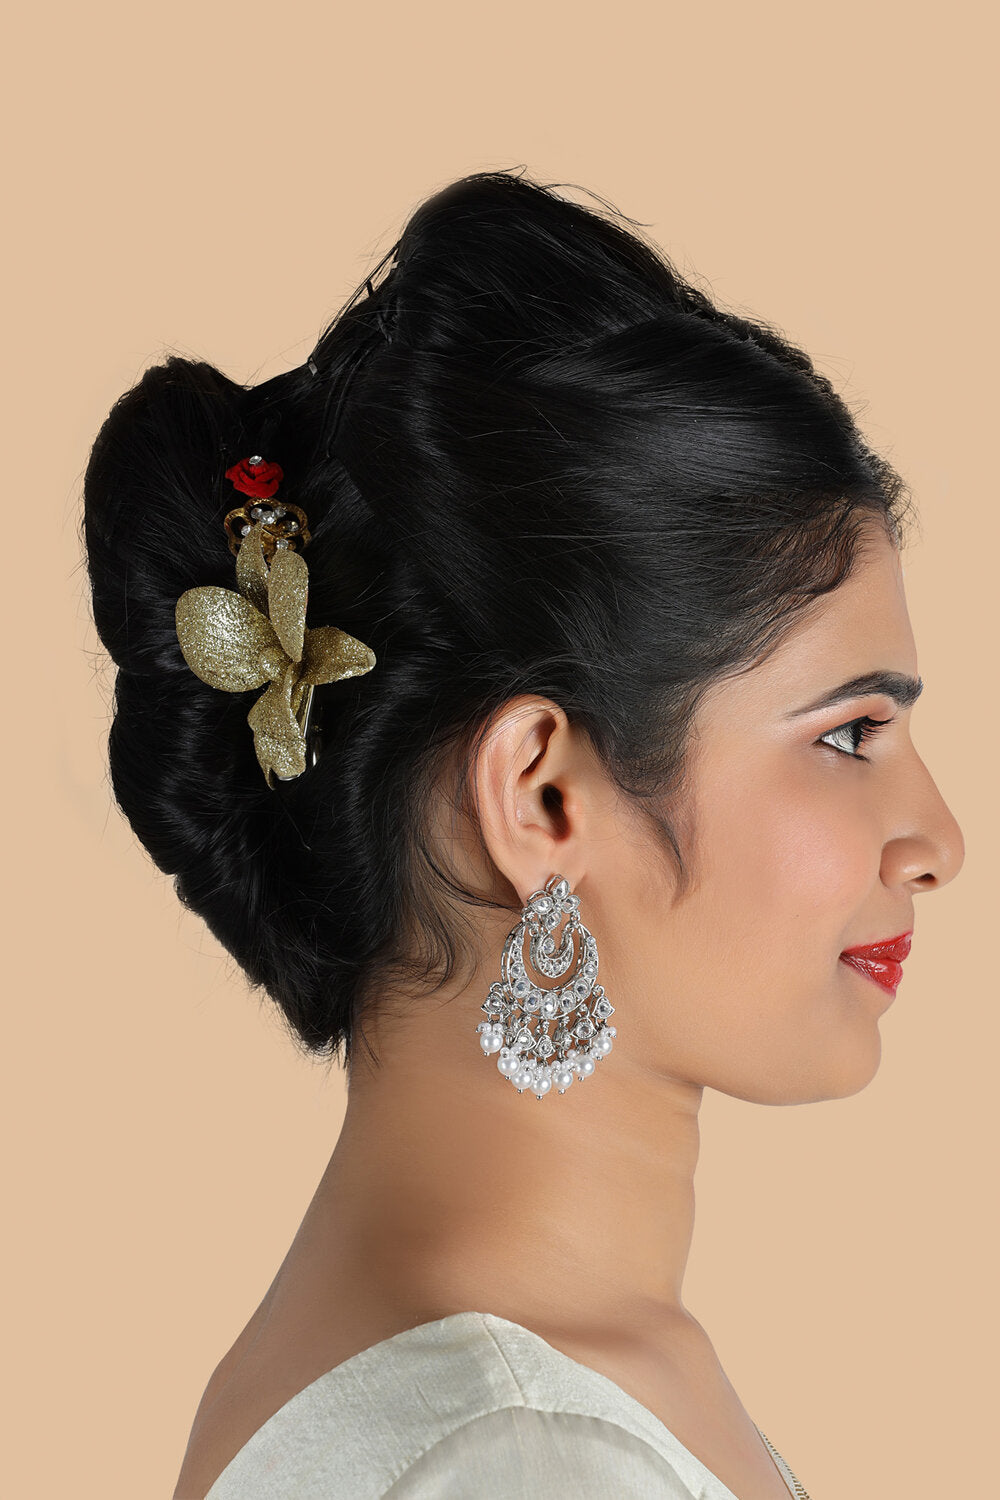 Rhodium Pearl Chandelier Earrings